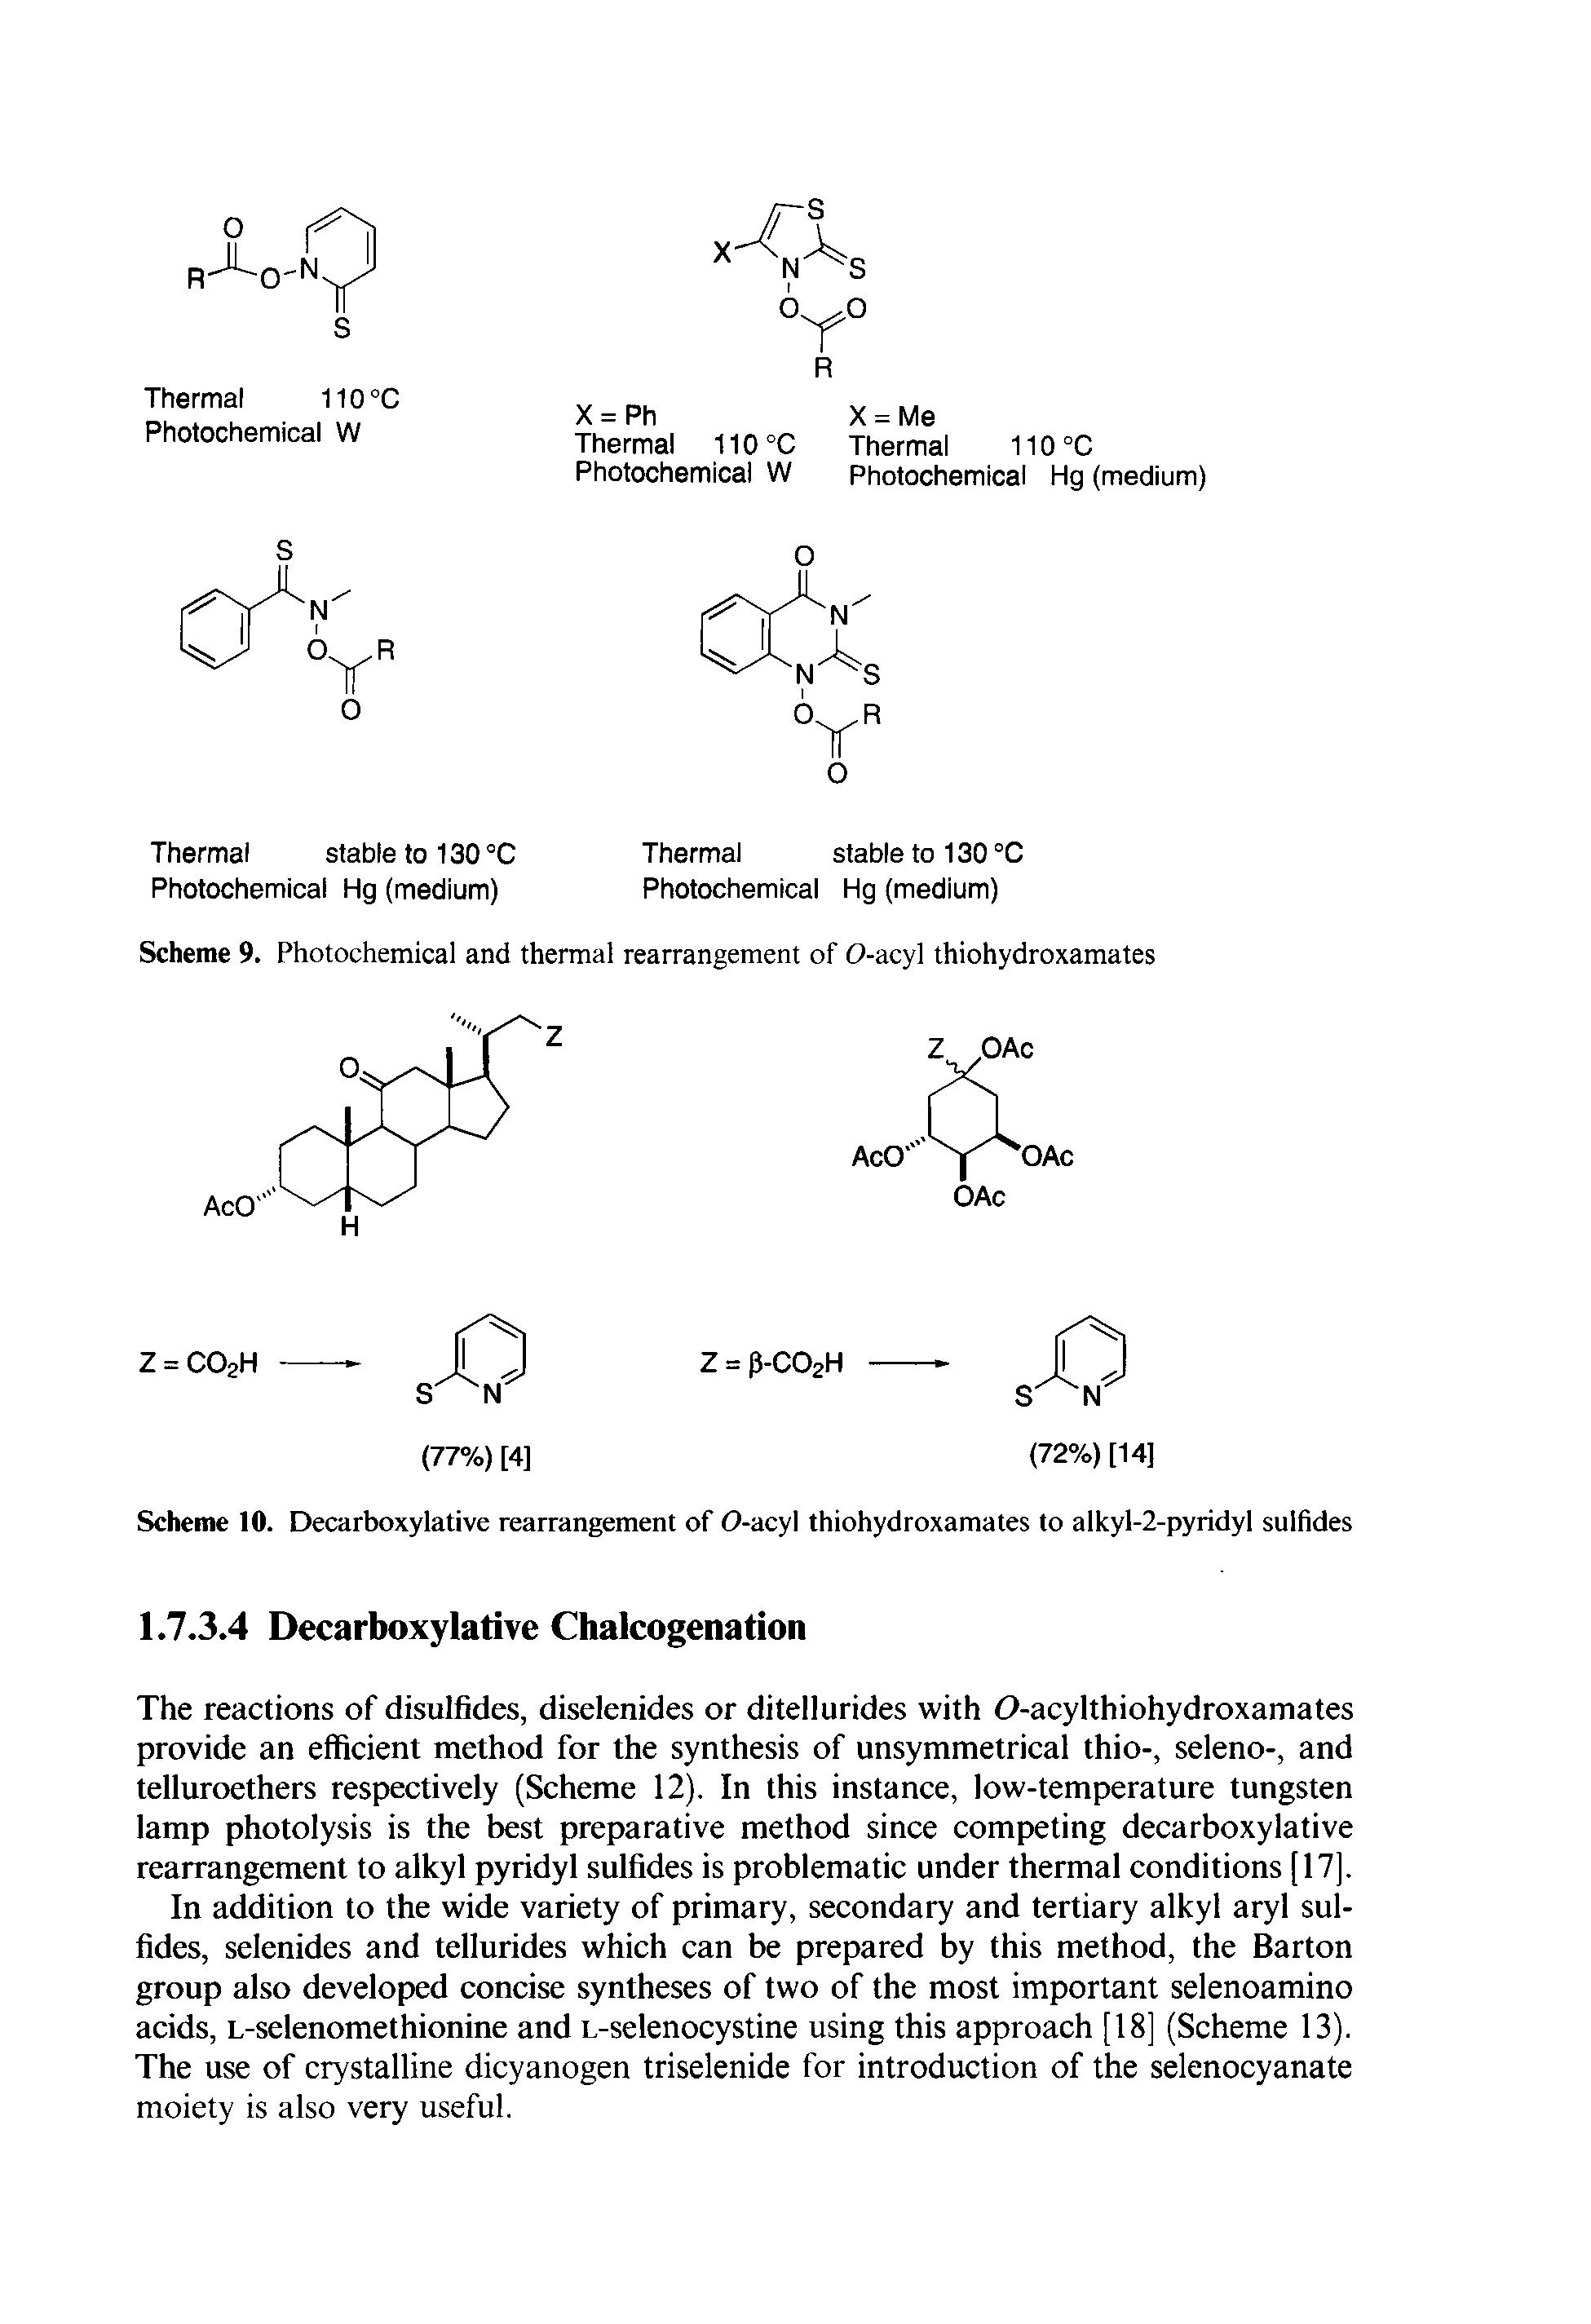 Scheme 10. Decarboxylative rearrangement of 0-acyl thiohydroxamates to alkyl-2-pyridyl sulfides...